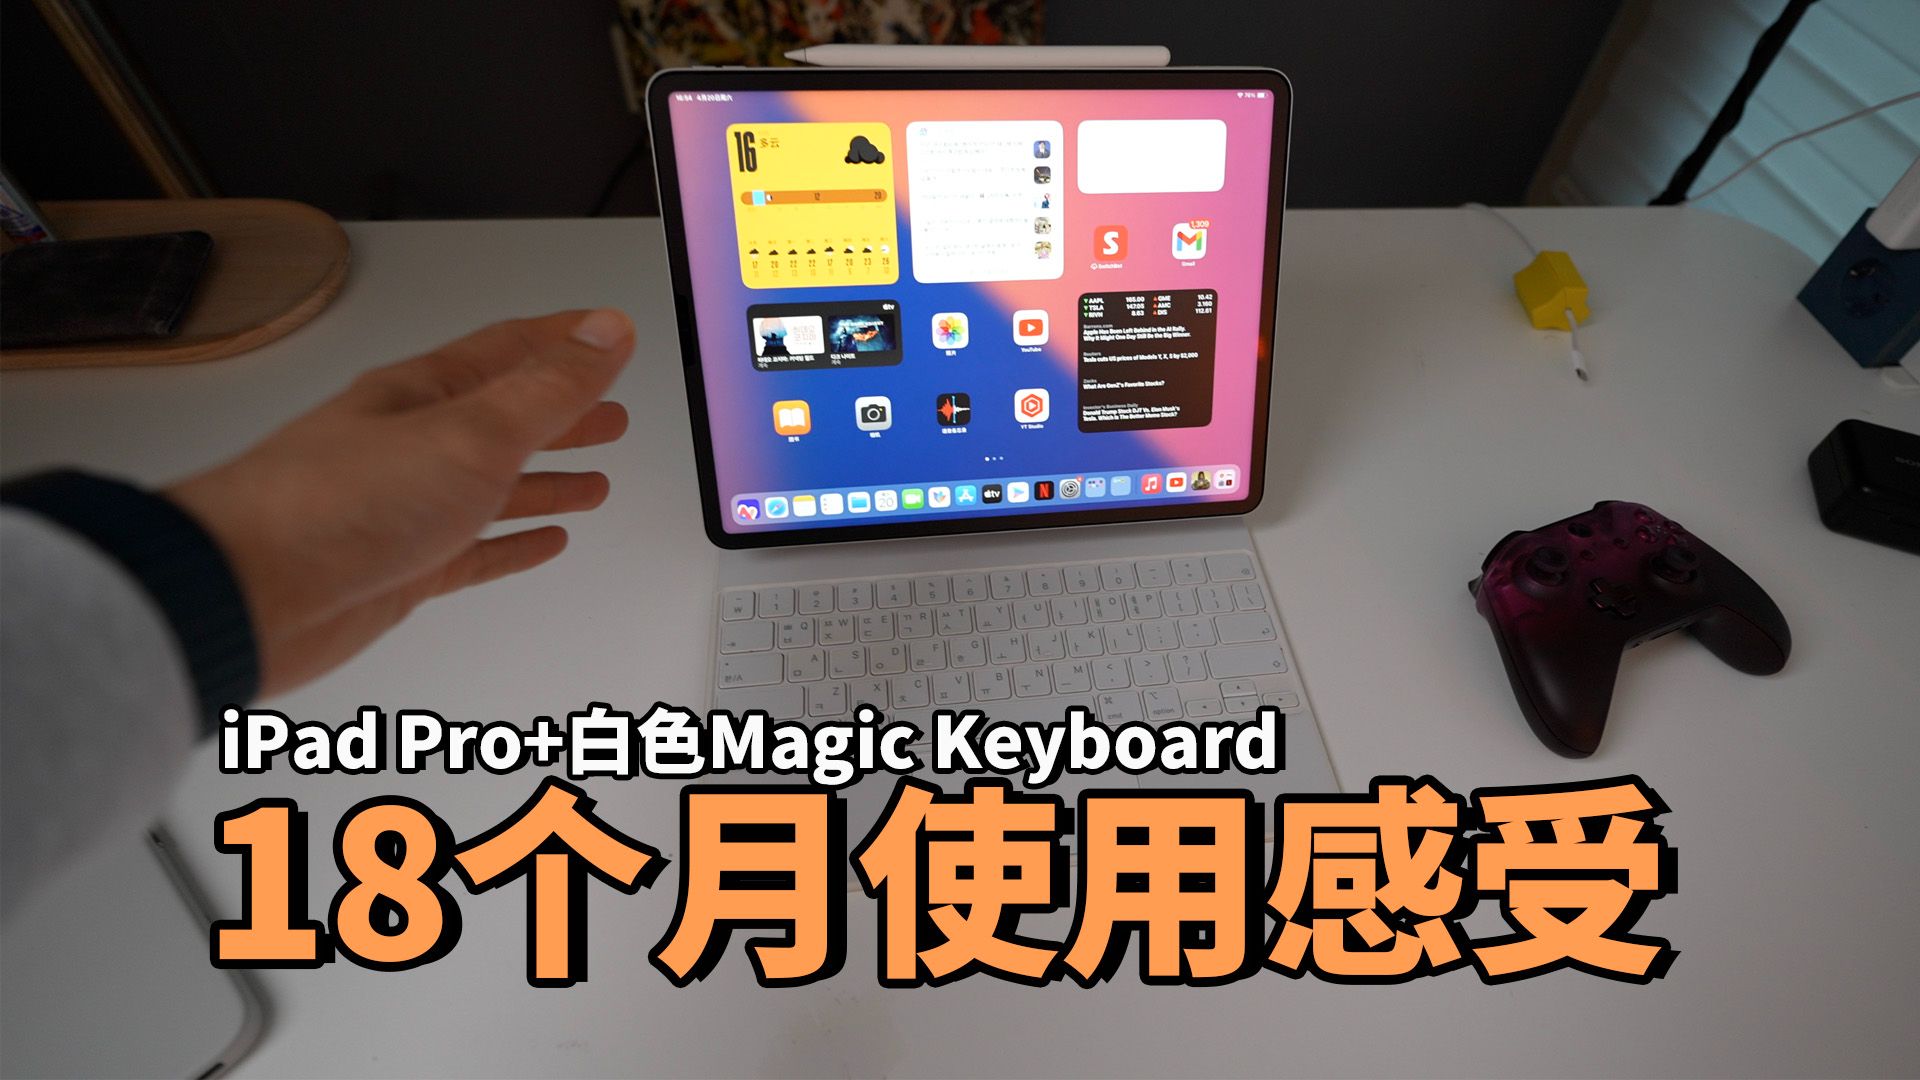 【iPad Pro】使用18个月之后，真实感受到的优点和缺点！feat. 白色Magic Keyboard/屏幕/性能/游戏/生产力｜大耳朵TV